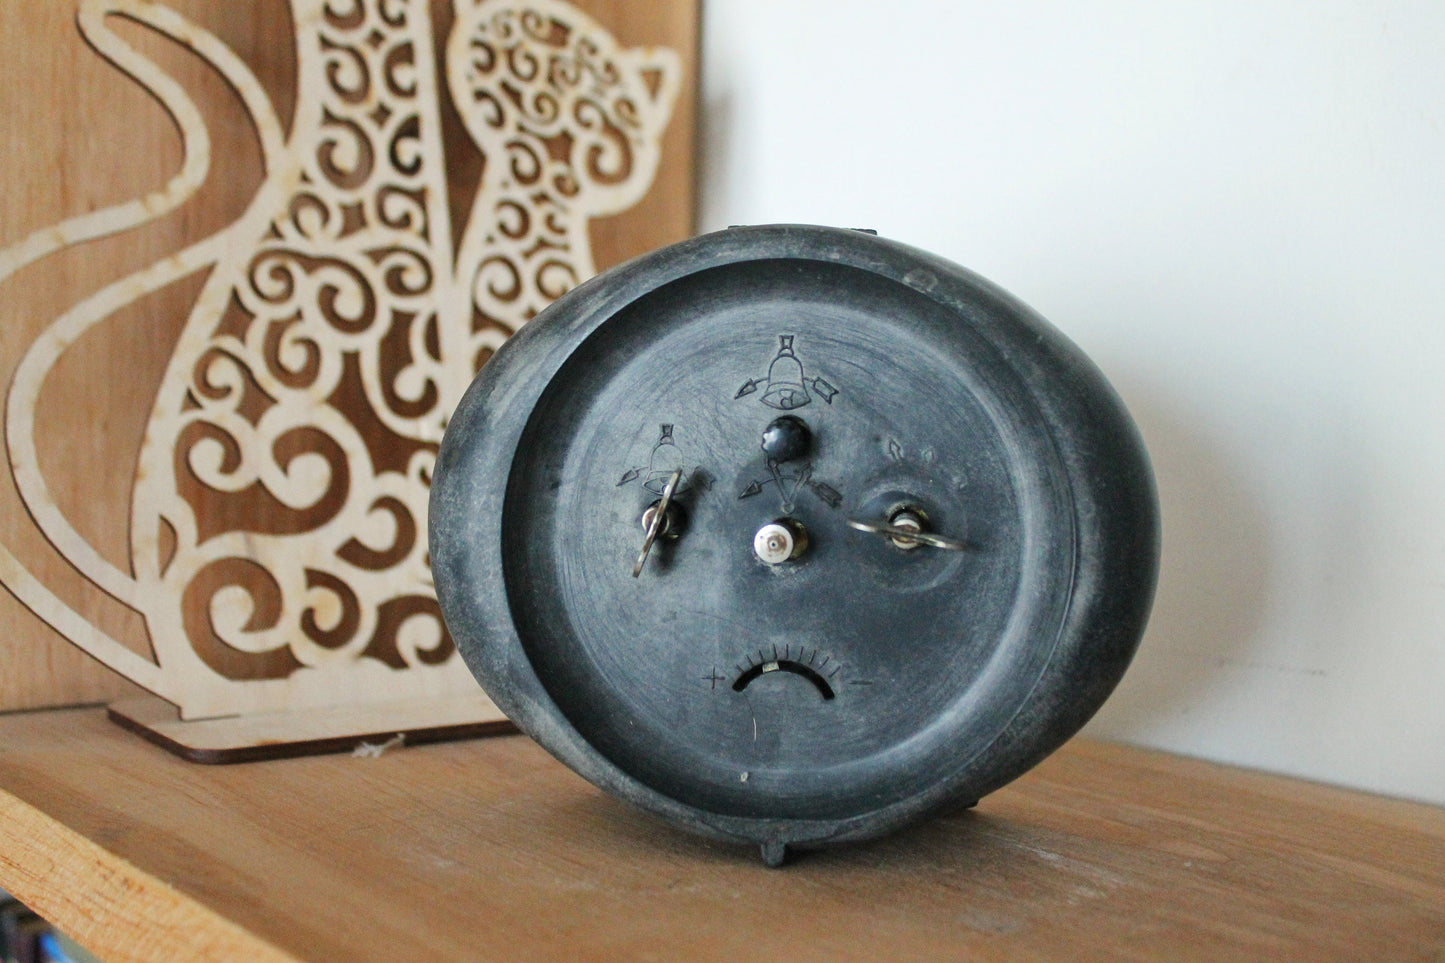 Yantar - Shabby chic black Vintage Rare Alarm Clock - Soviet Mechanical Alarm Clock - Home Decor - Vintage Decor